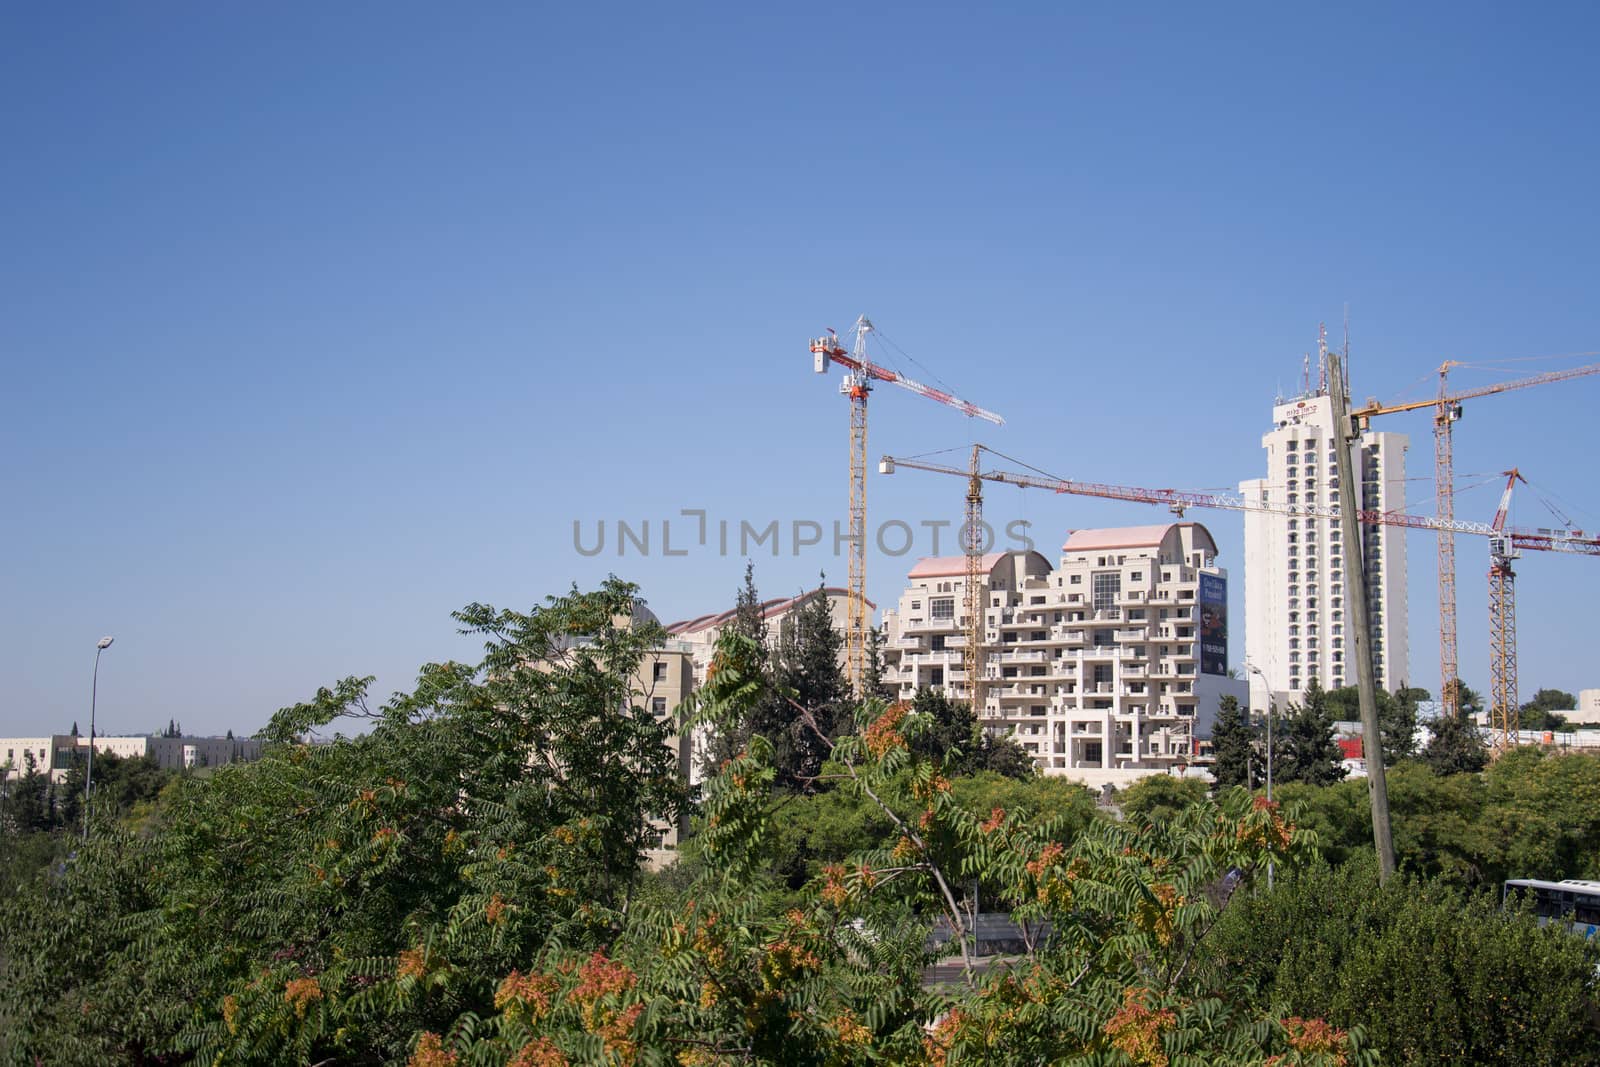 Construction cranes over new apartment buildings